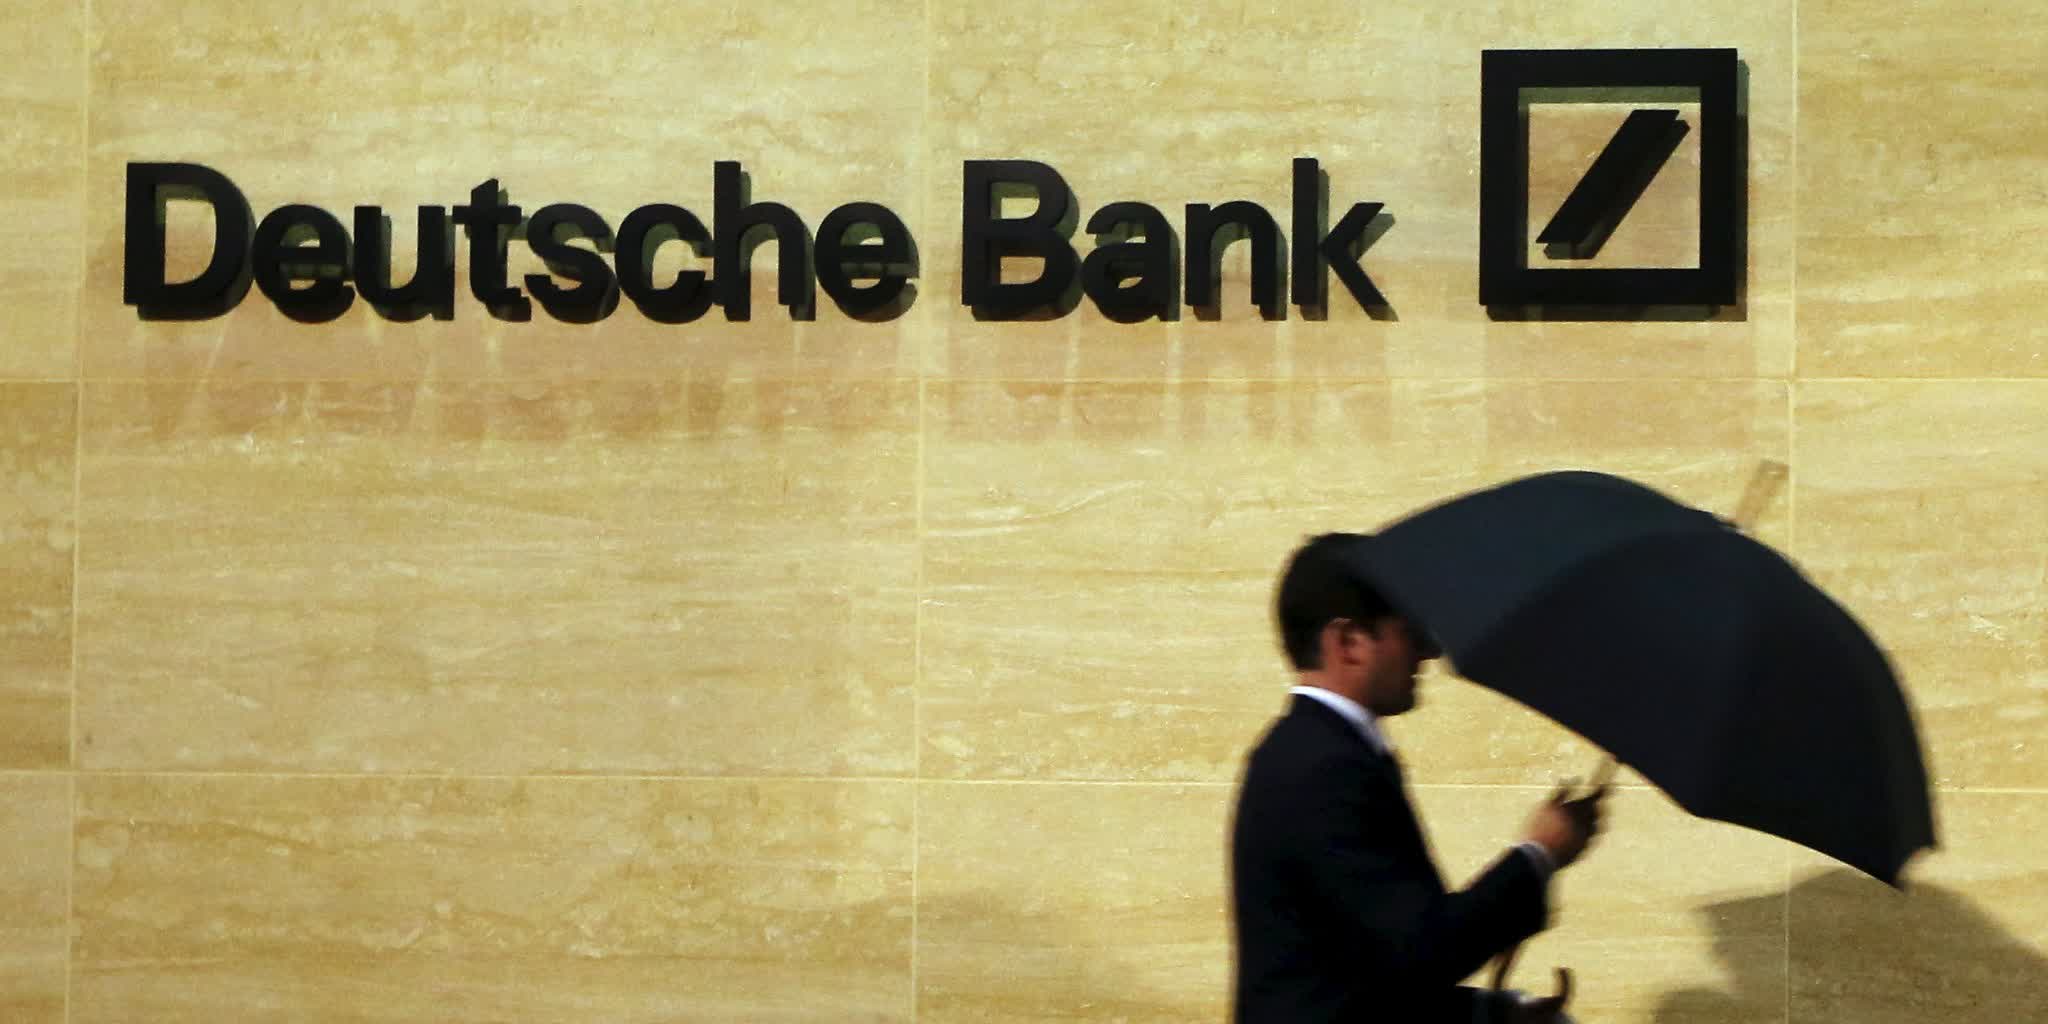 Deutsche Bank shares plunge as global banking worries go on